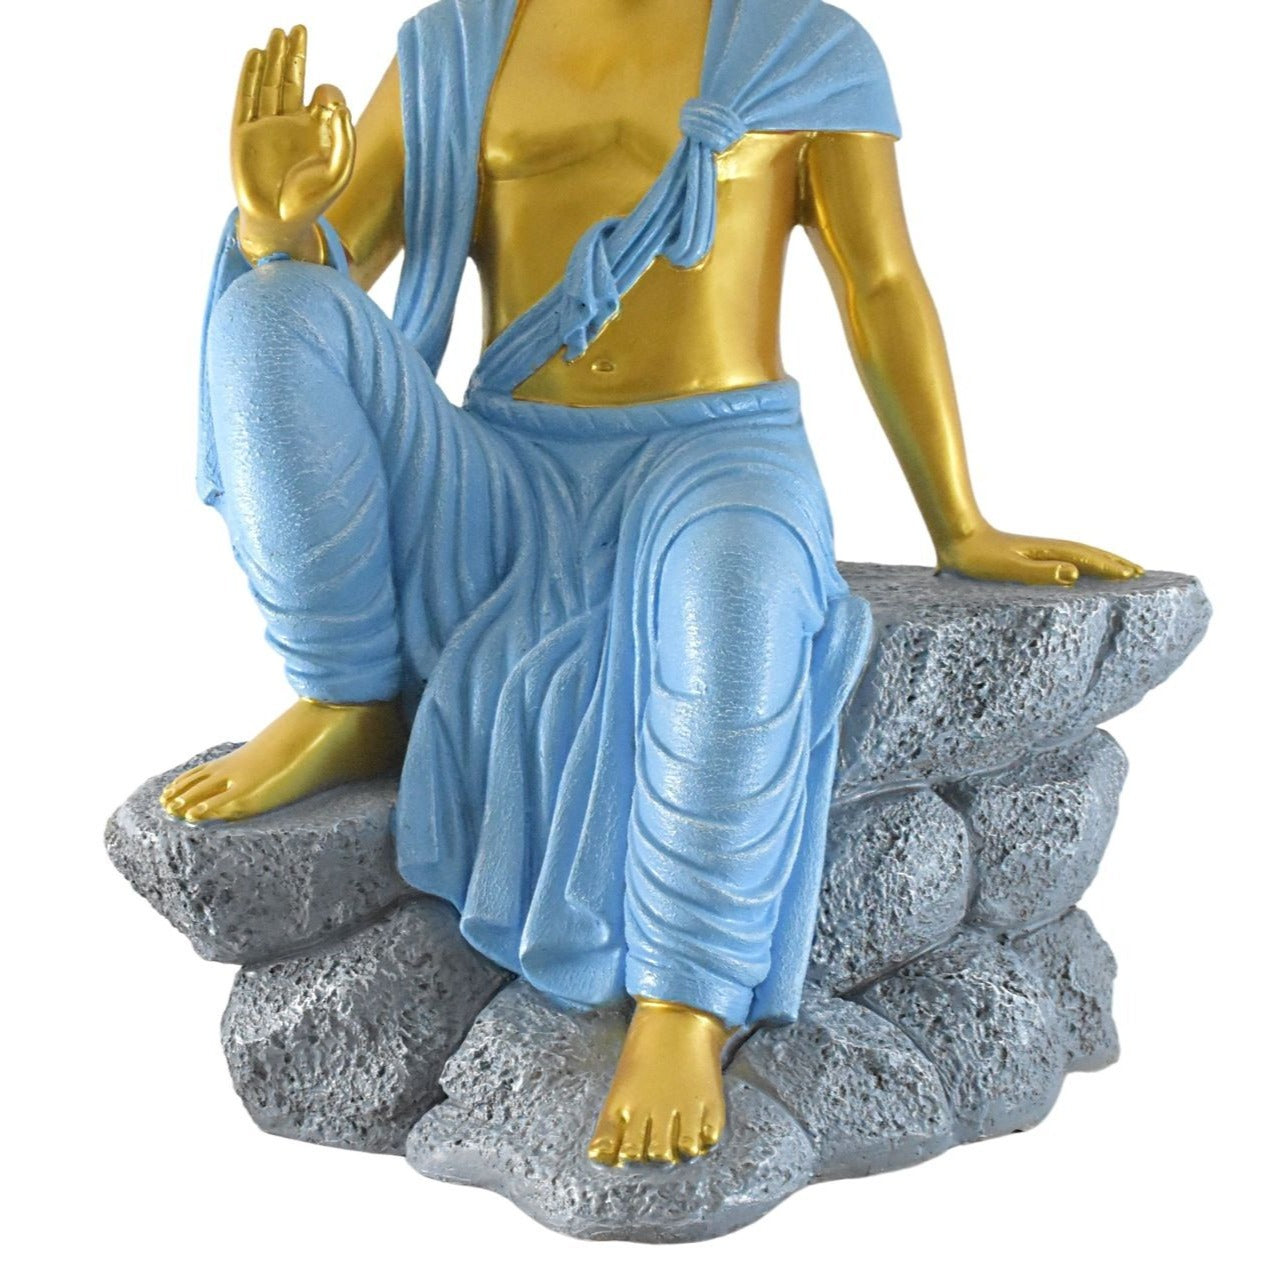 2.4 Feet Blessing Buddha Resting on Mountain- Golden Blue - Deczo